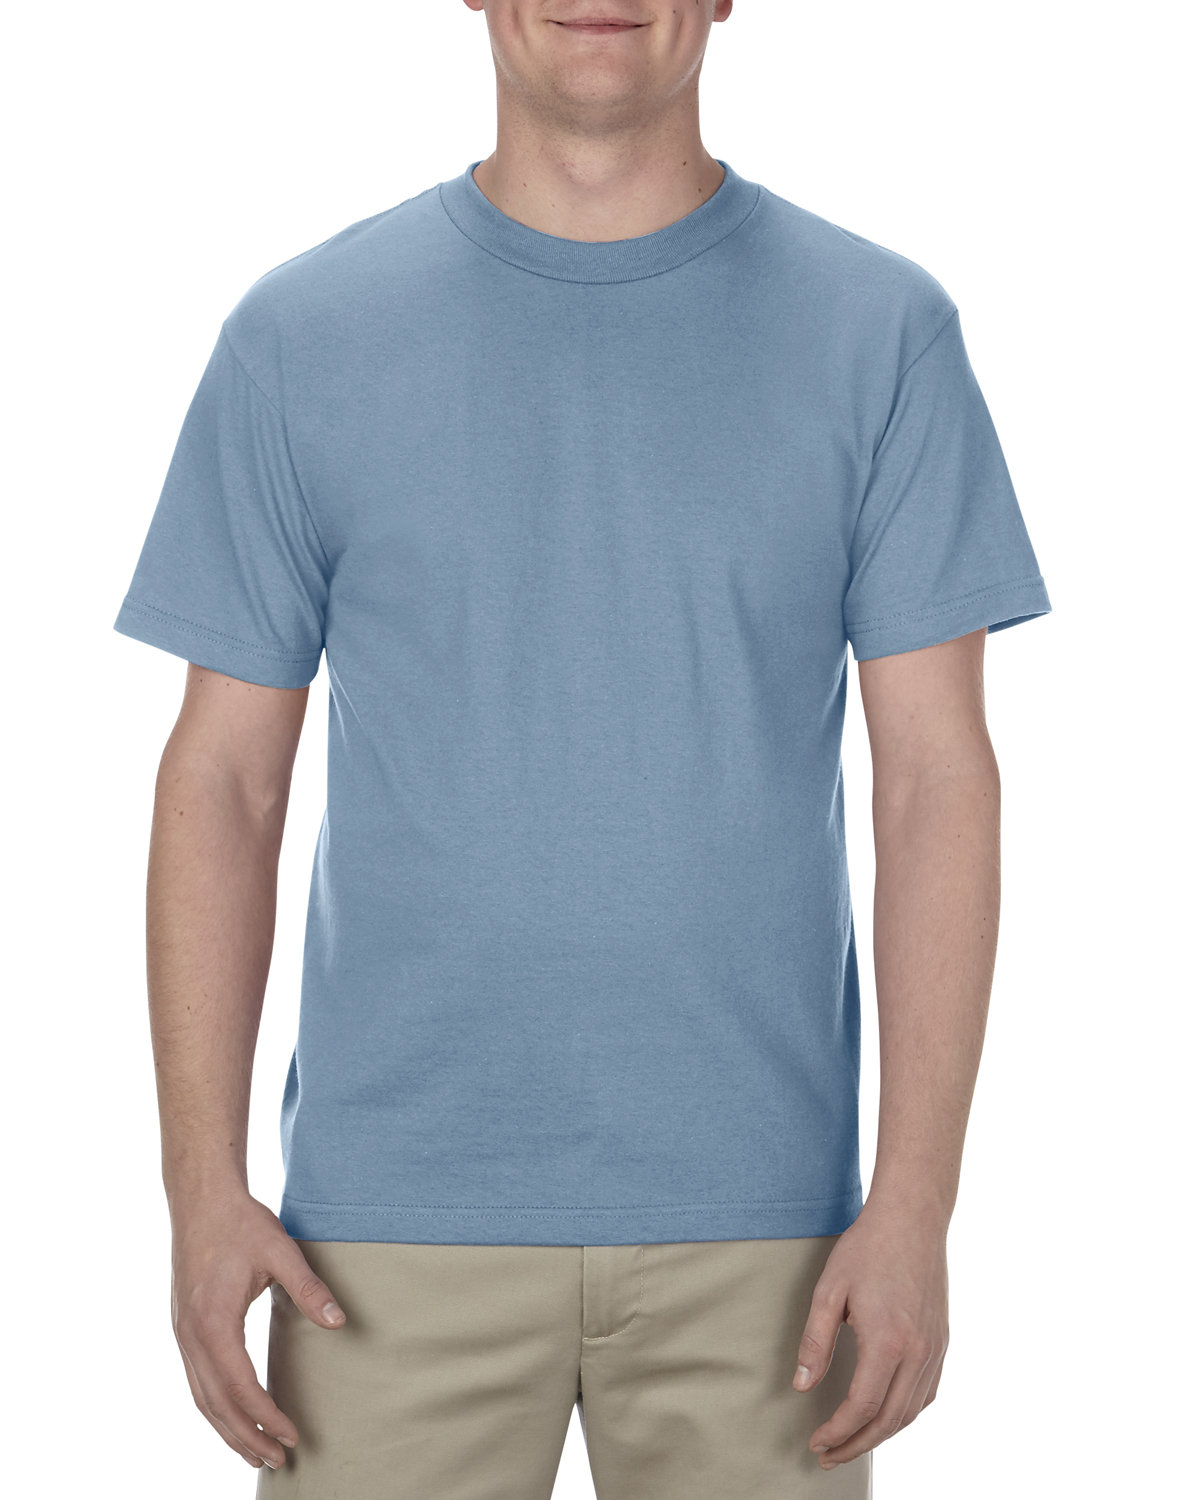 American Apparel Adult 6.0 oz., 100% Cotton T-Shirt SLATE 